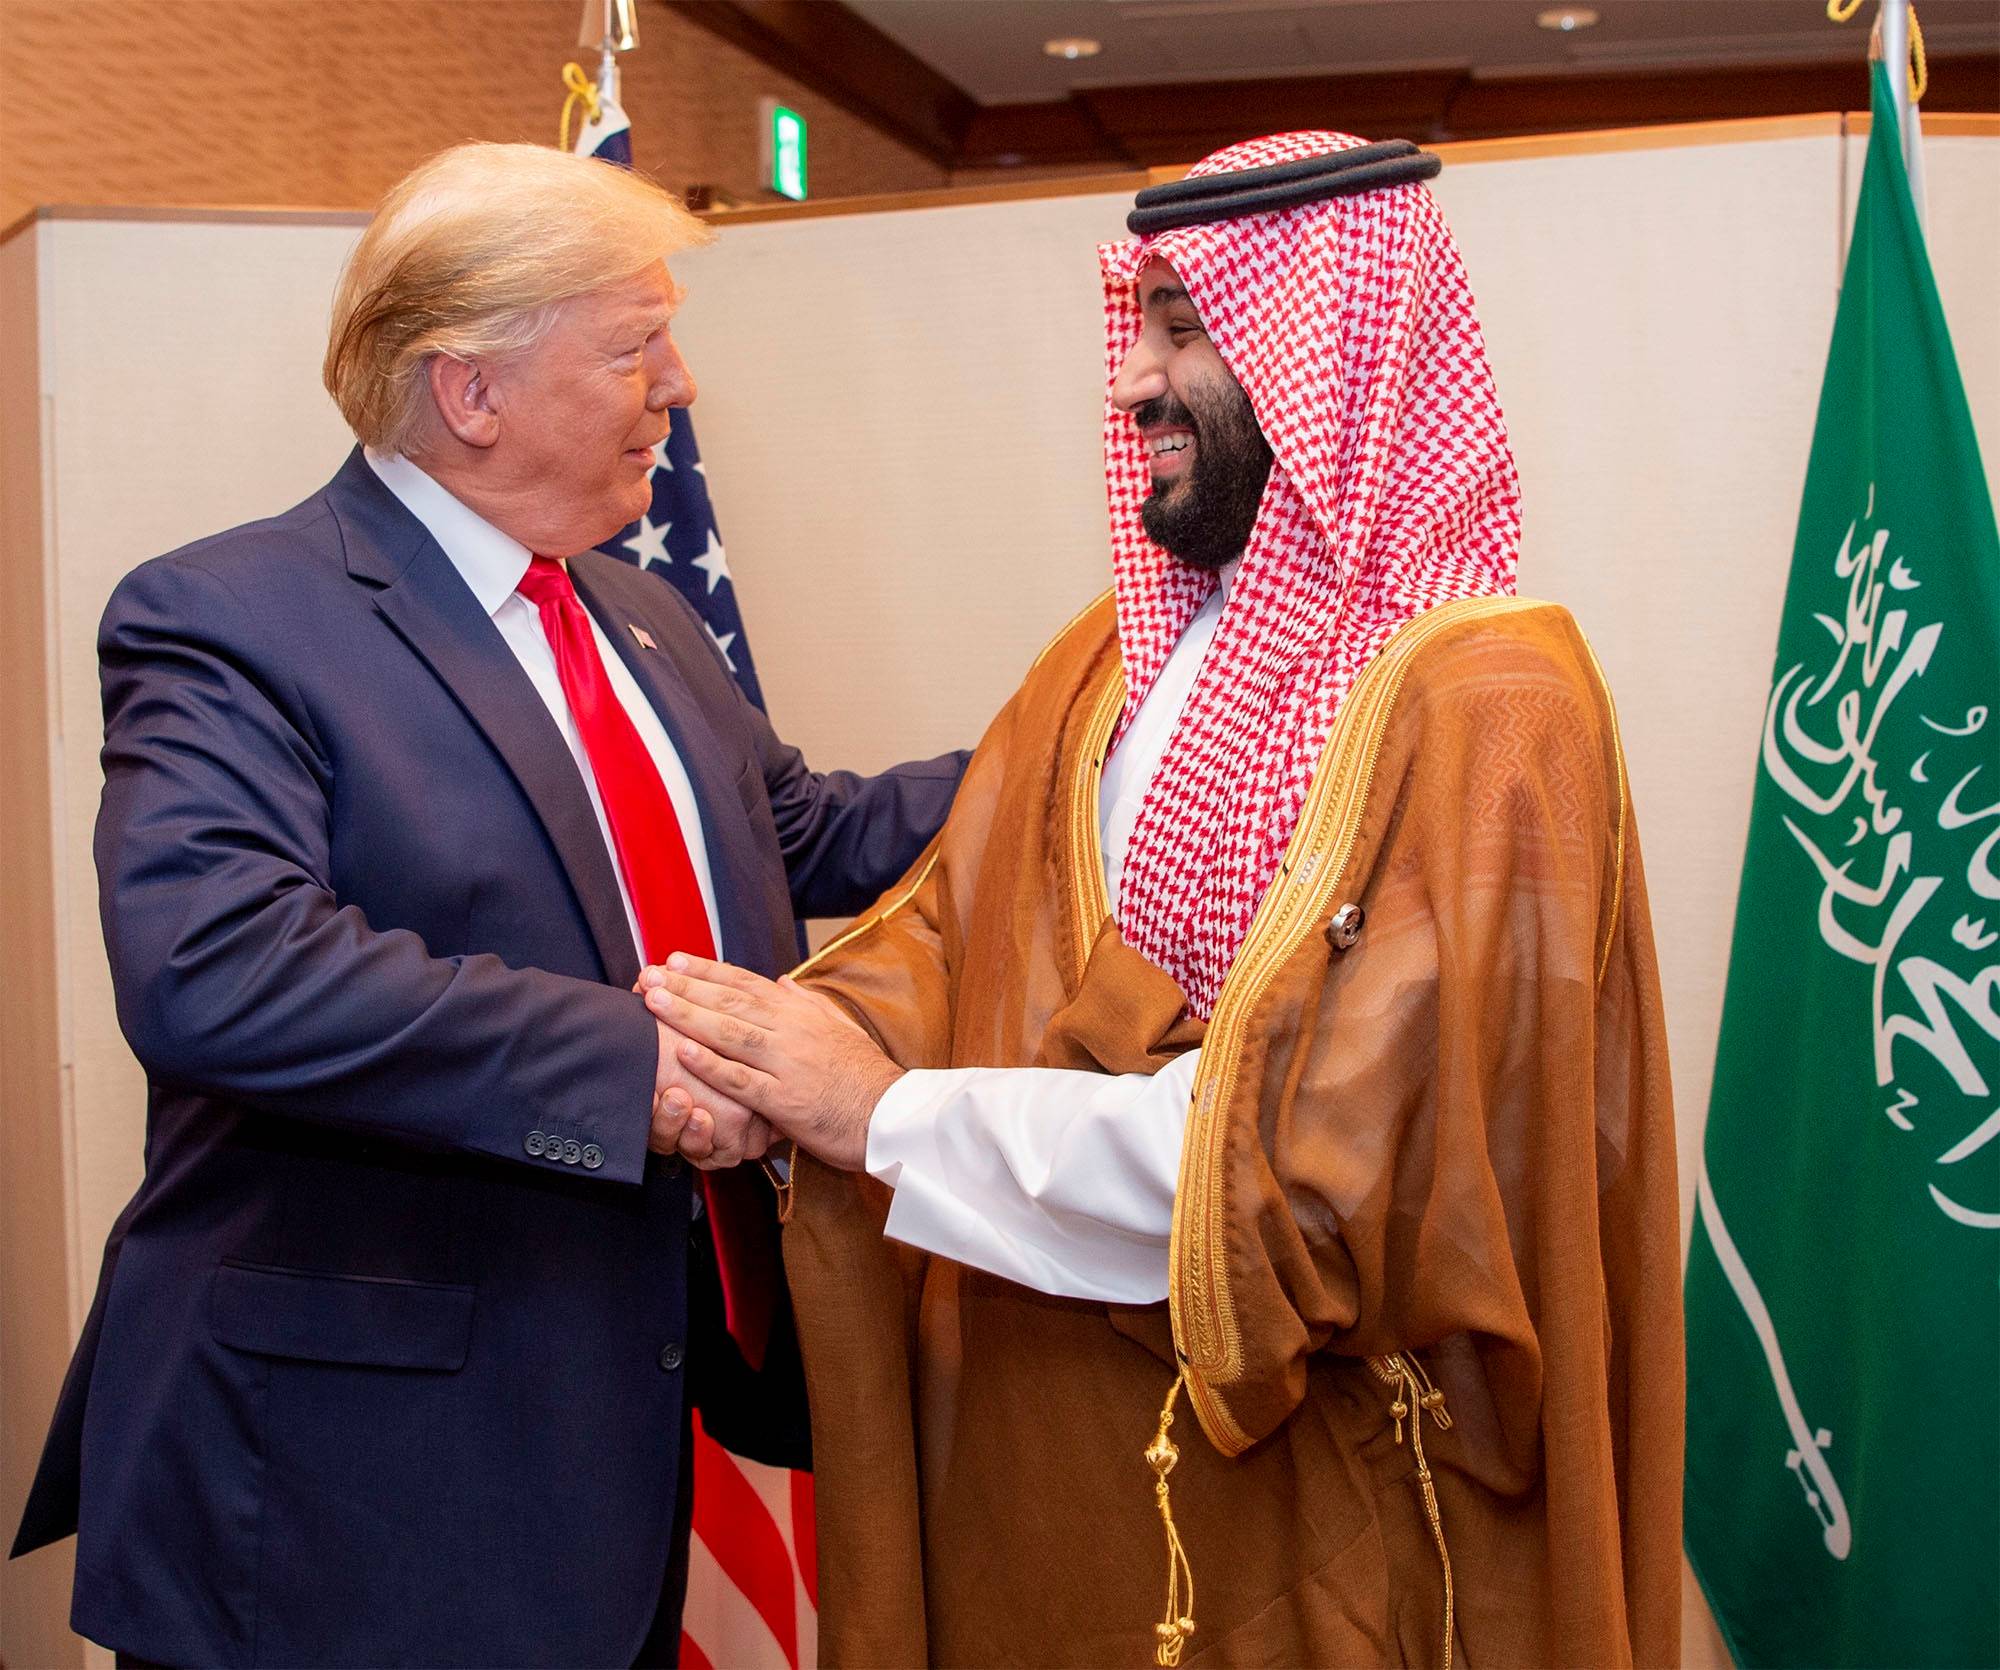 Saudi Arabian Crown Prince Mohammed bin Salman greets U.S. President Donald Trump at the G20 leaders summit in Osaka last year.